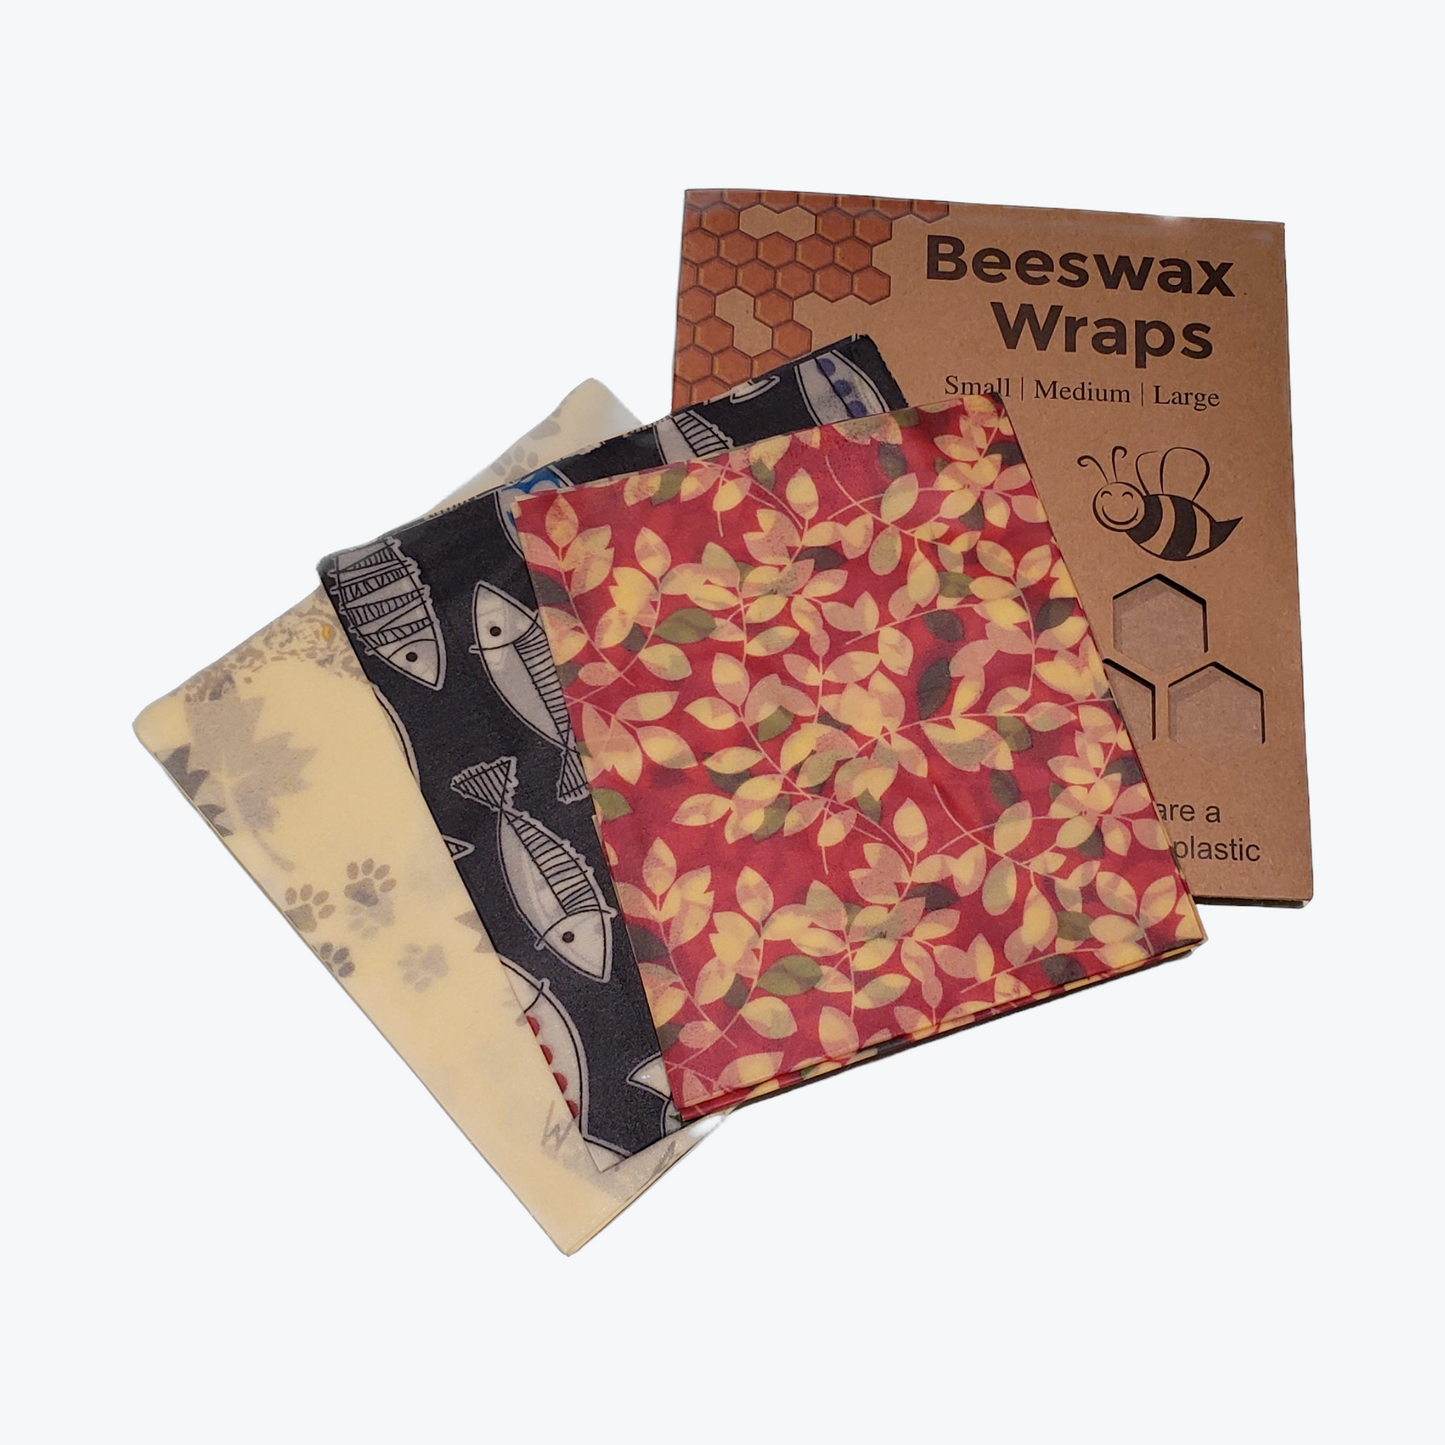 Beeswax Food Wrap